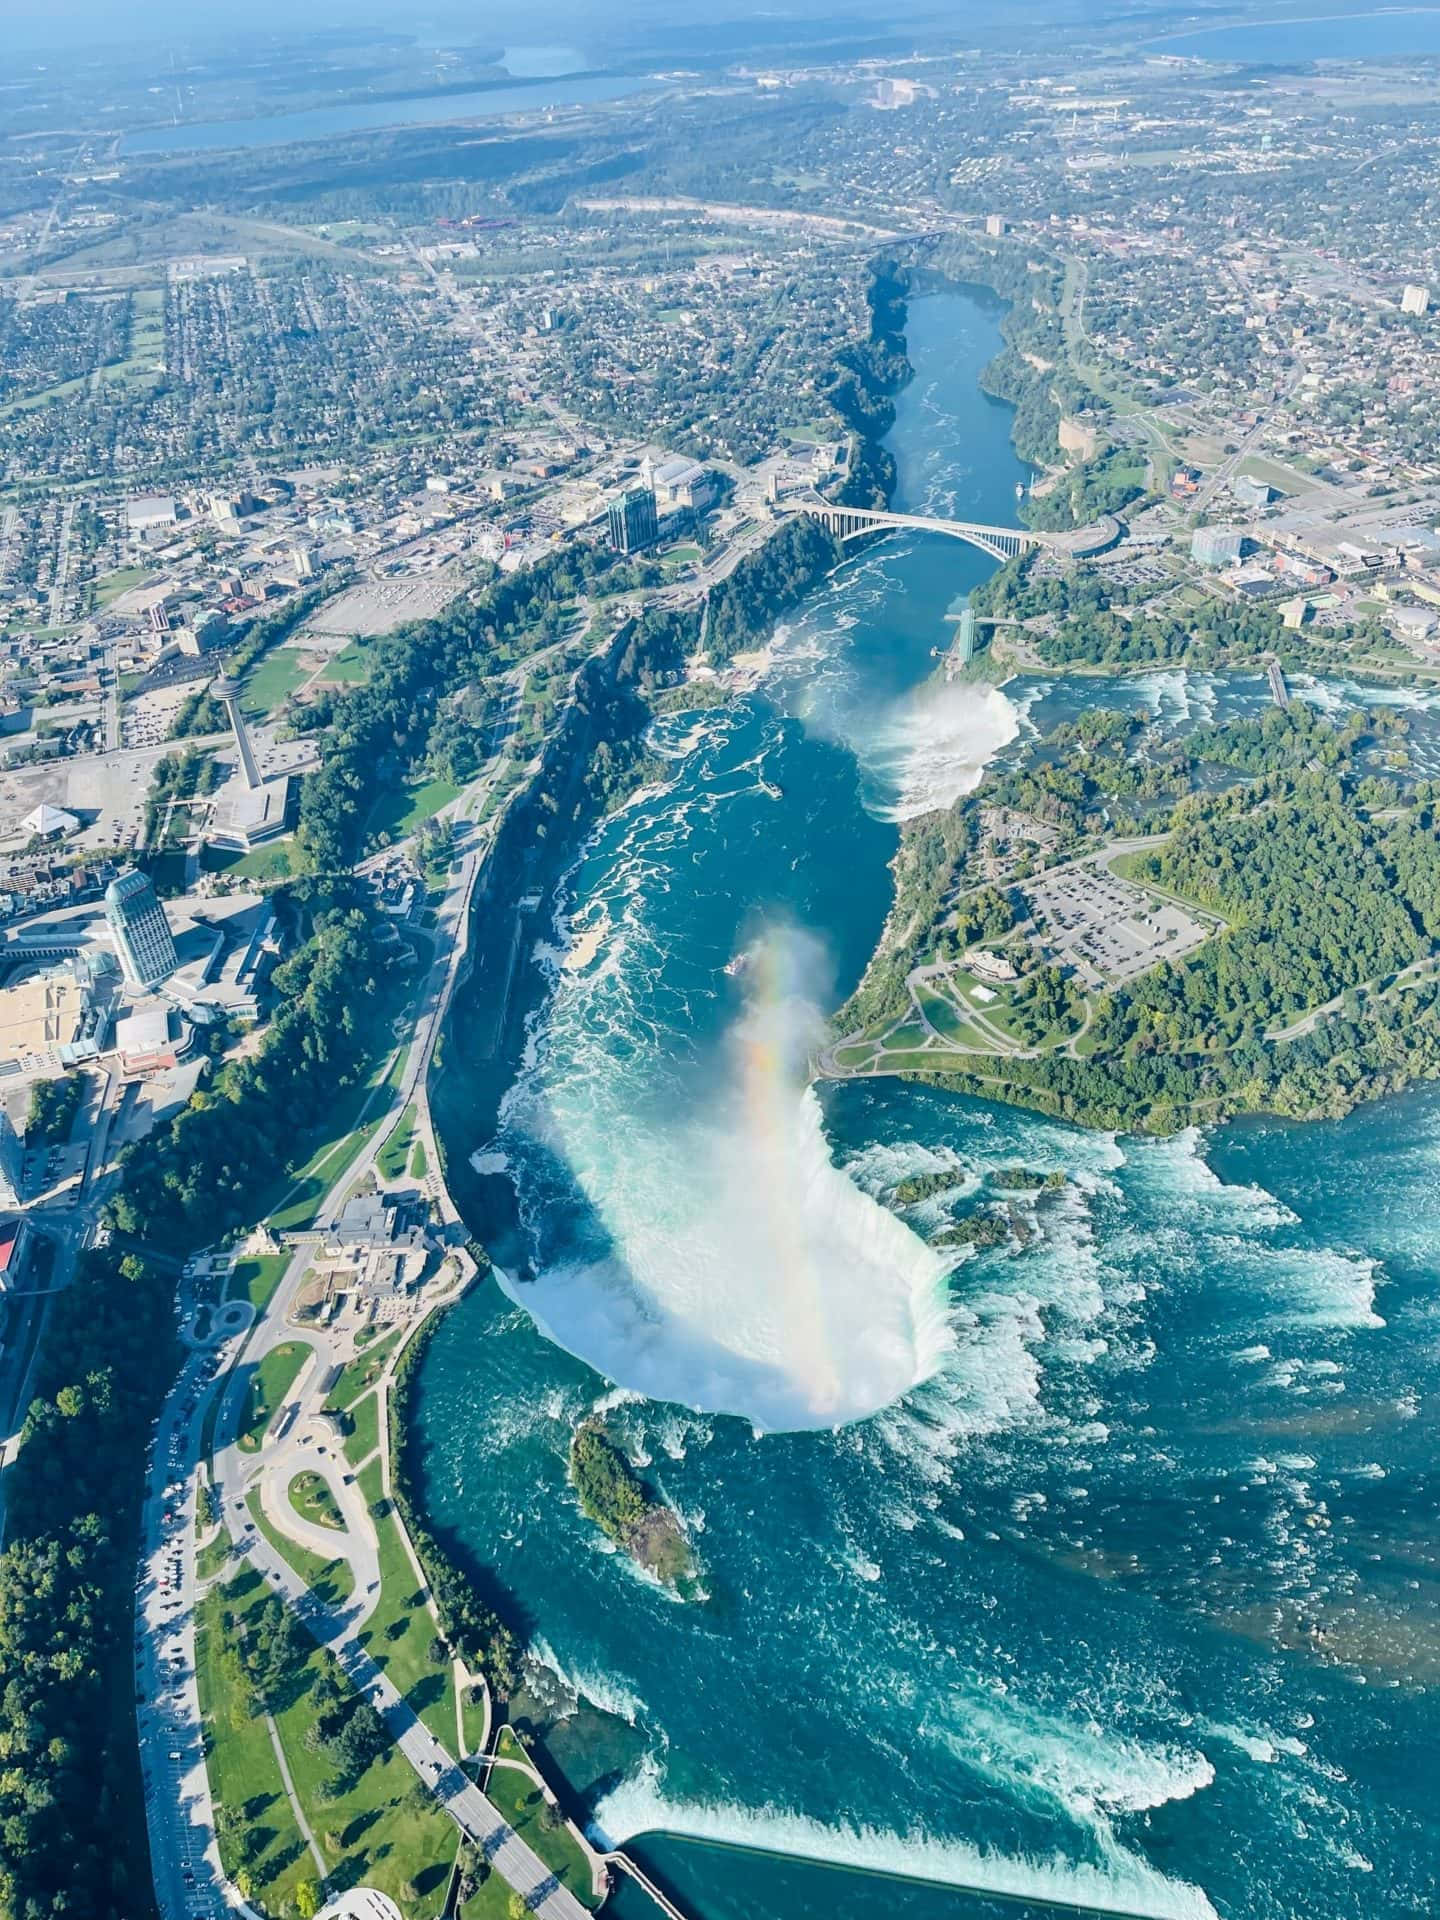 Alive and Magnificent - Niagara Falls